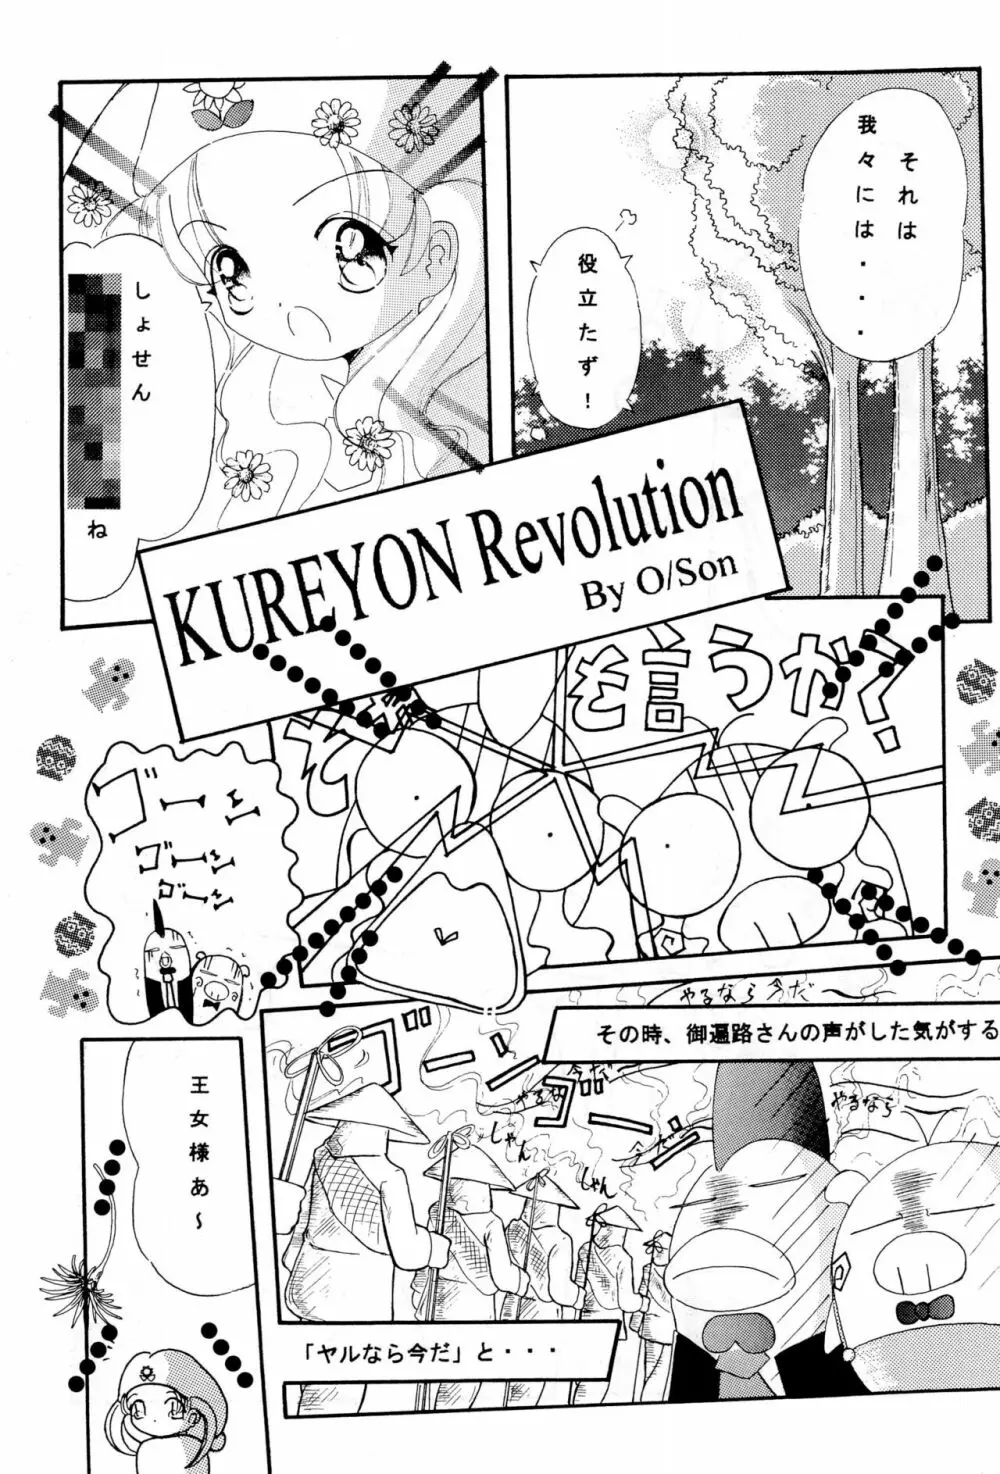 Dreamy Kingdom of Creyons - page21